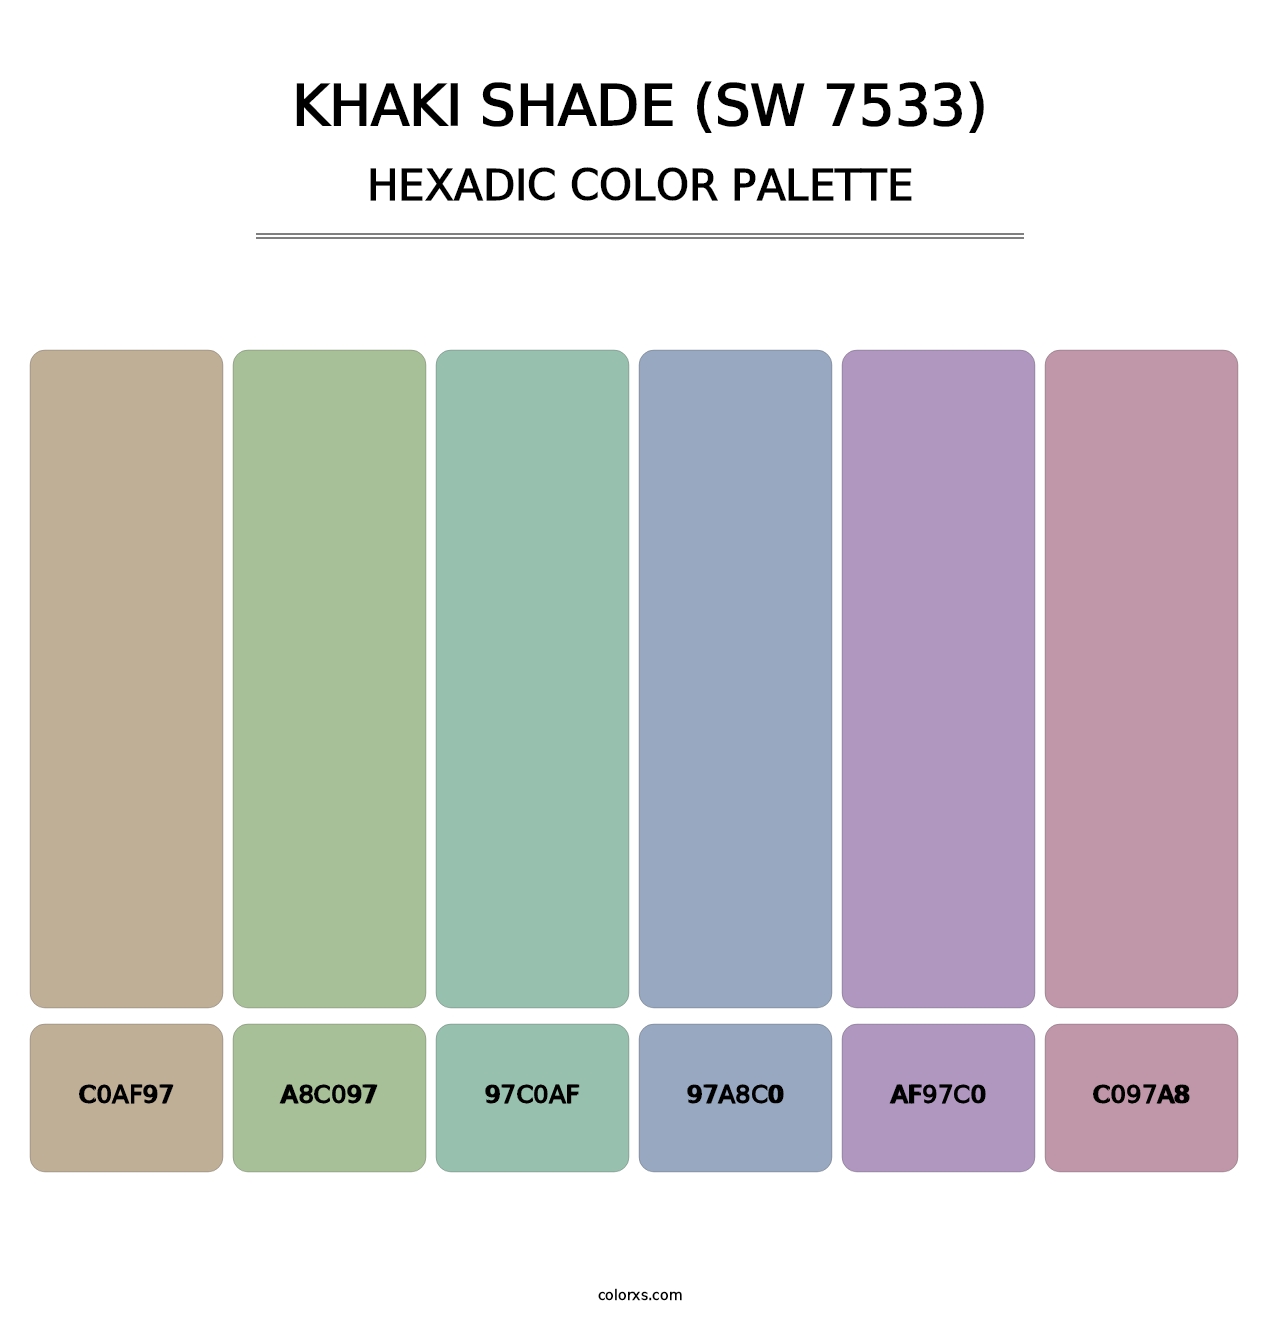 Khaki Shade (SW 7533) - Hexadic Color Palette